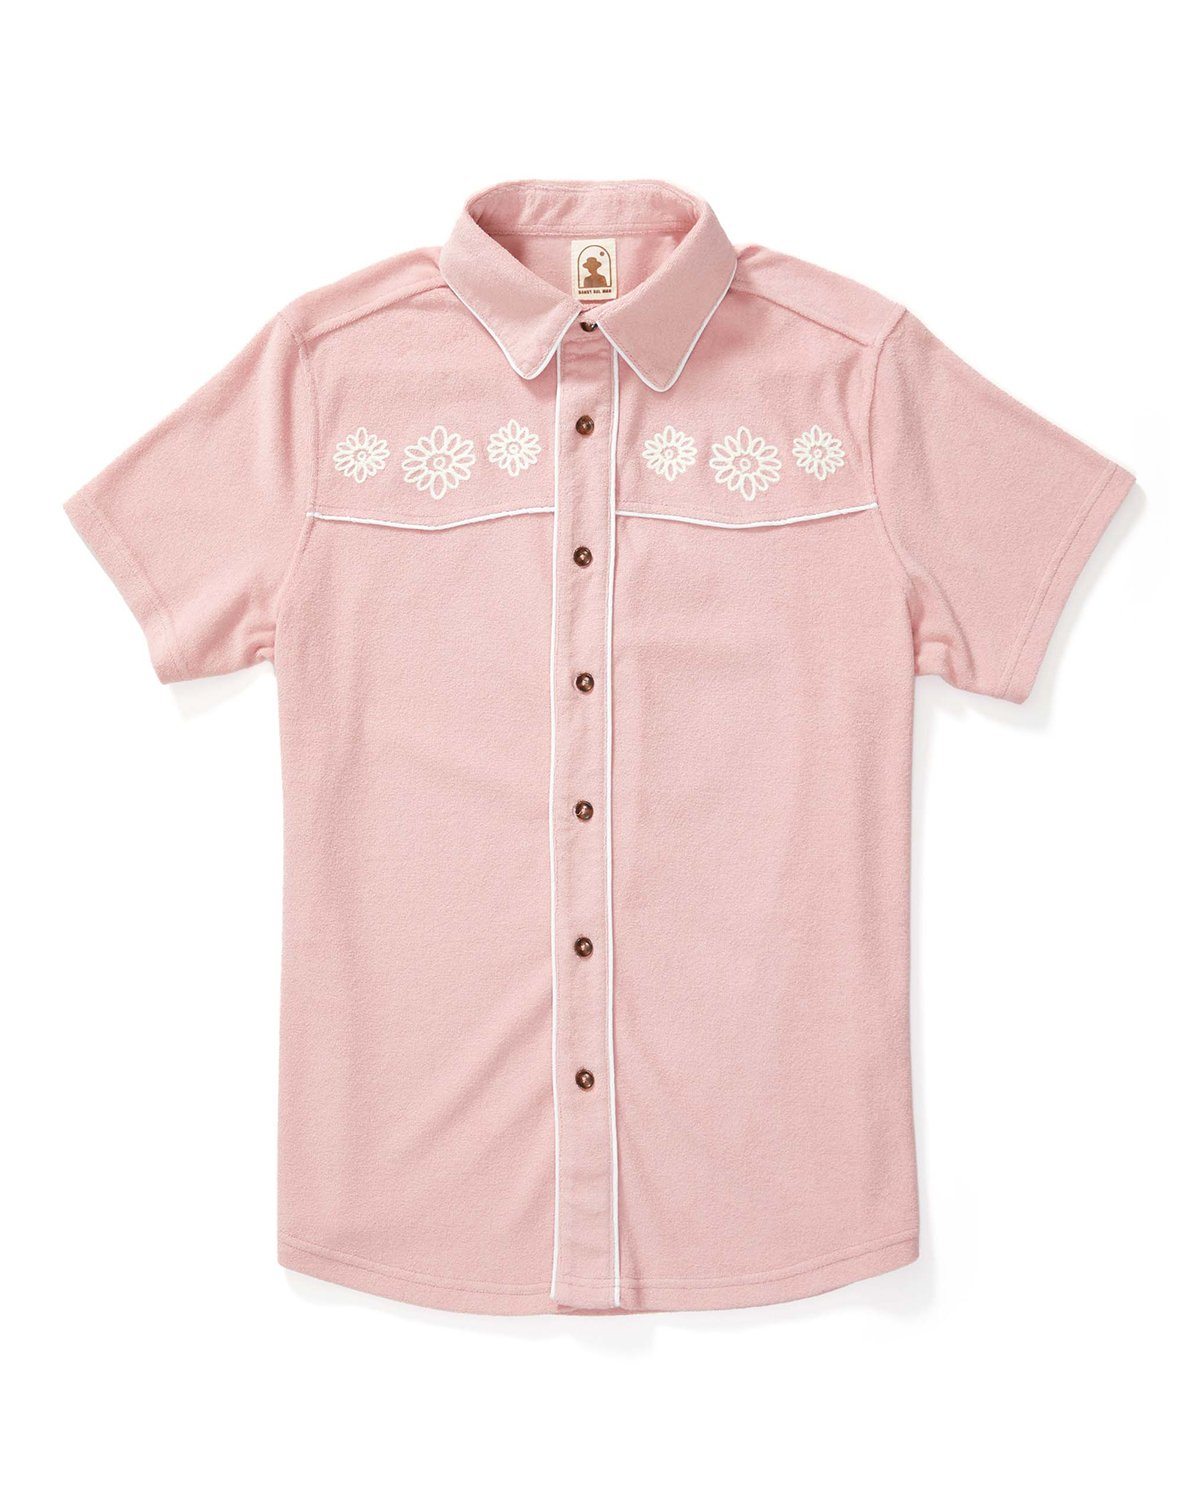 Image of The Gaucho Terry Cloth Shirt - Mauve